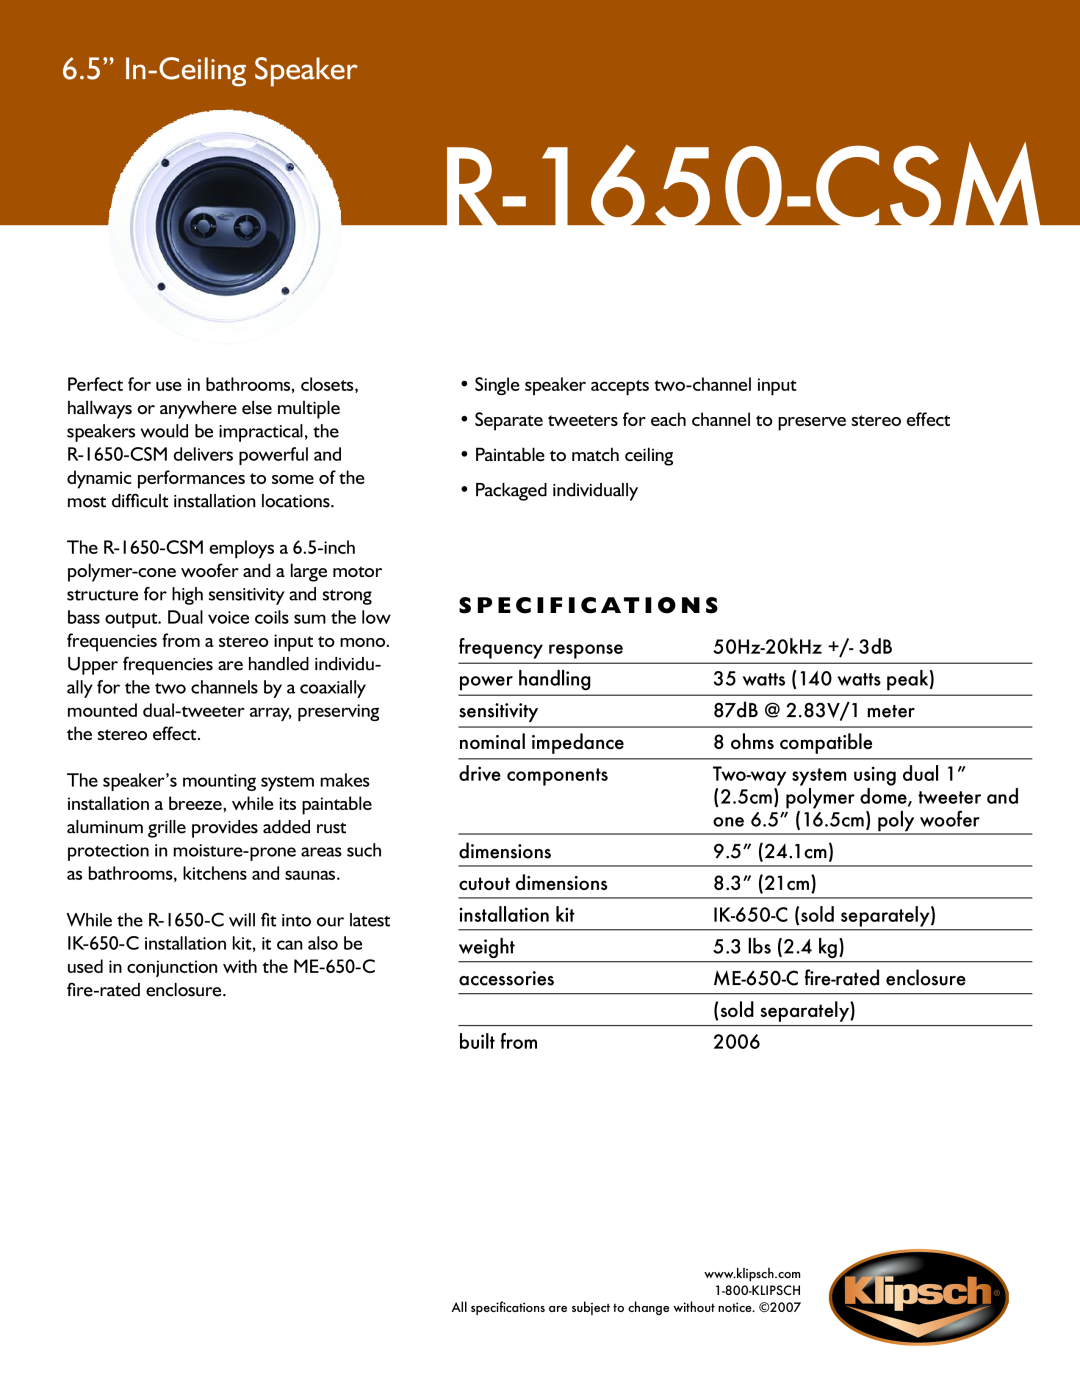 Klipsch R-1650-CSM specifications 6.5” In-CeilingSpeaker, S p e c i f i c a t i o n s 